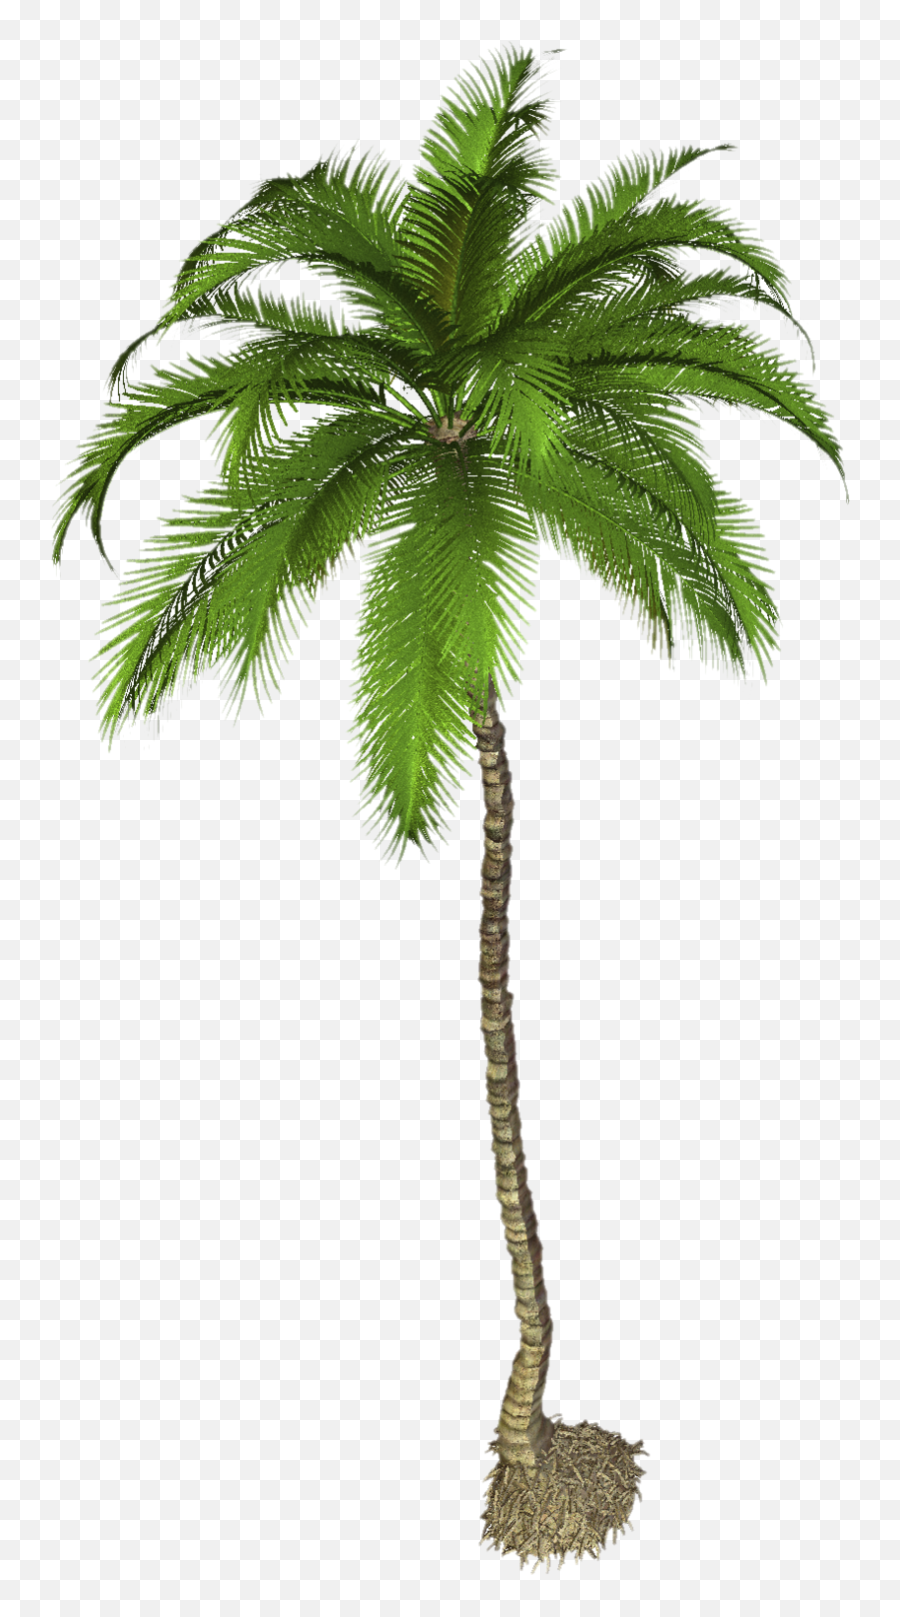 Download Free Png Free Icons Pngpalm Tree Png - Dlpngcom Tropical Palm Tree Png Emoji,Palm Tree Emoji